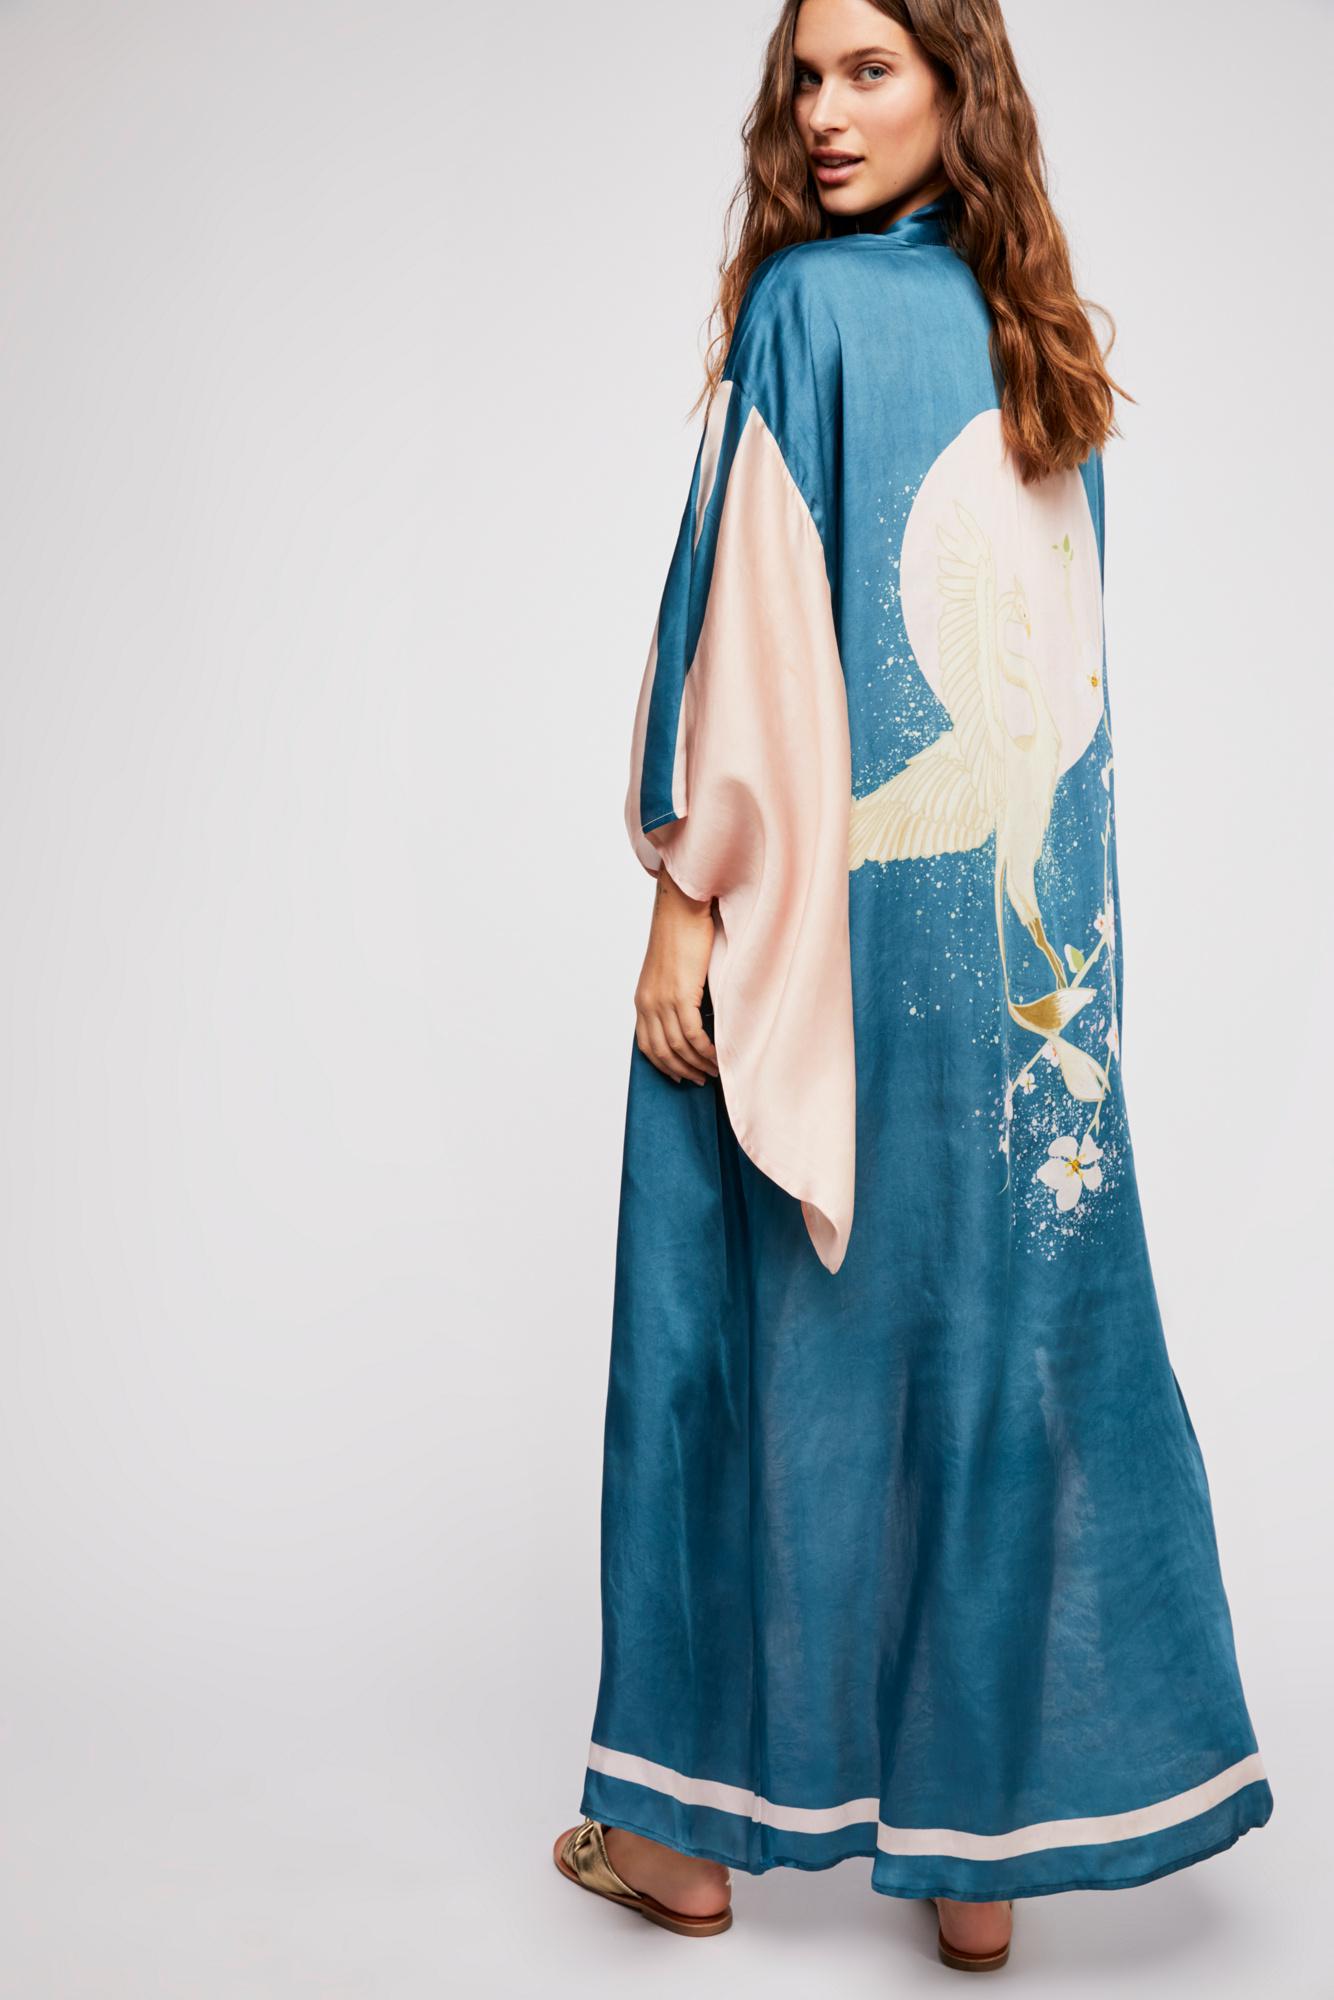 Free People Synthetic Rising Sun Maxi Kimono in Blue - Lyst